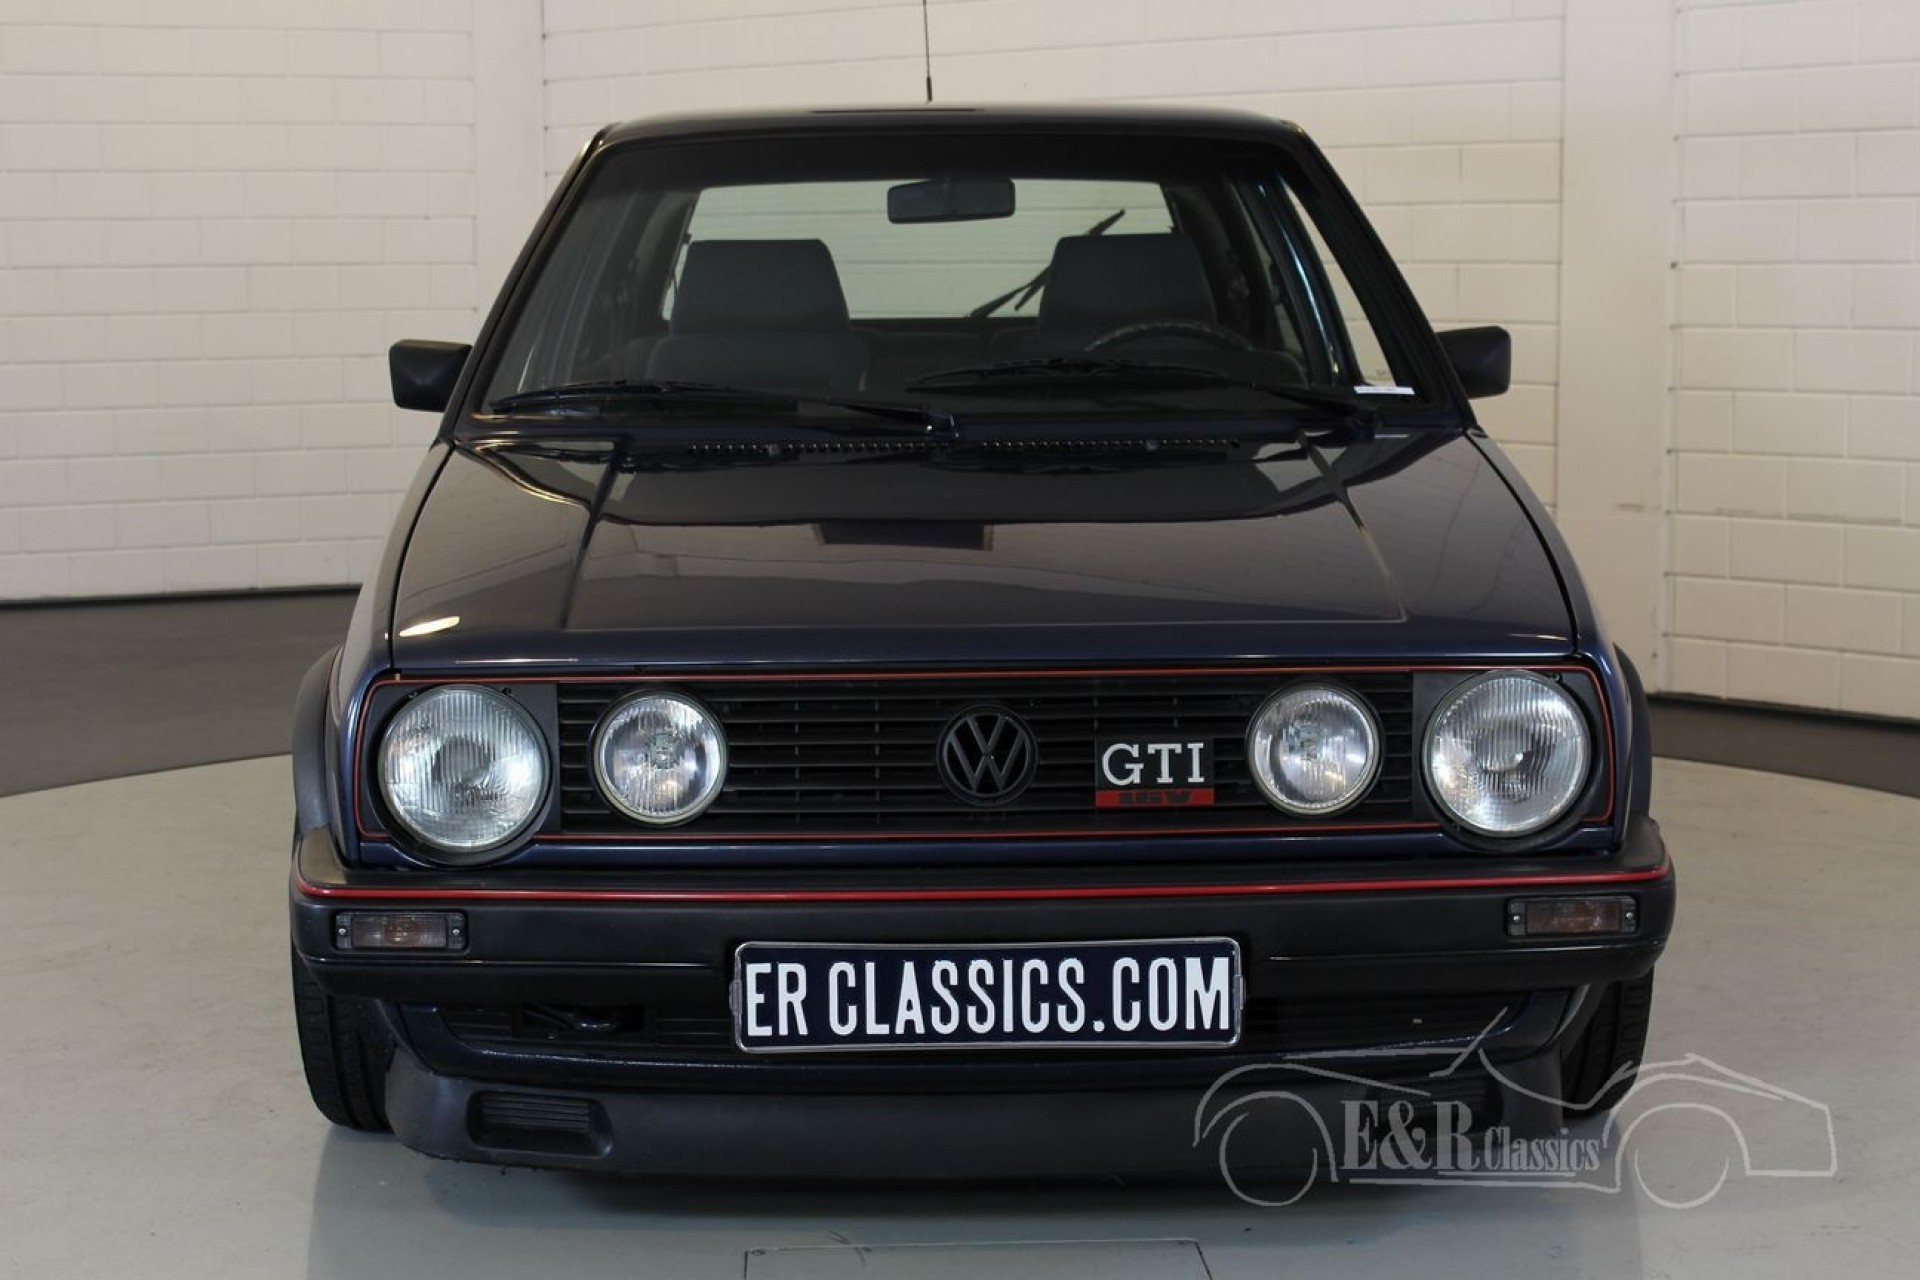 Volkswagen Golf Mk2 Gti 16v 1987 For Sale At Erclassics